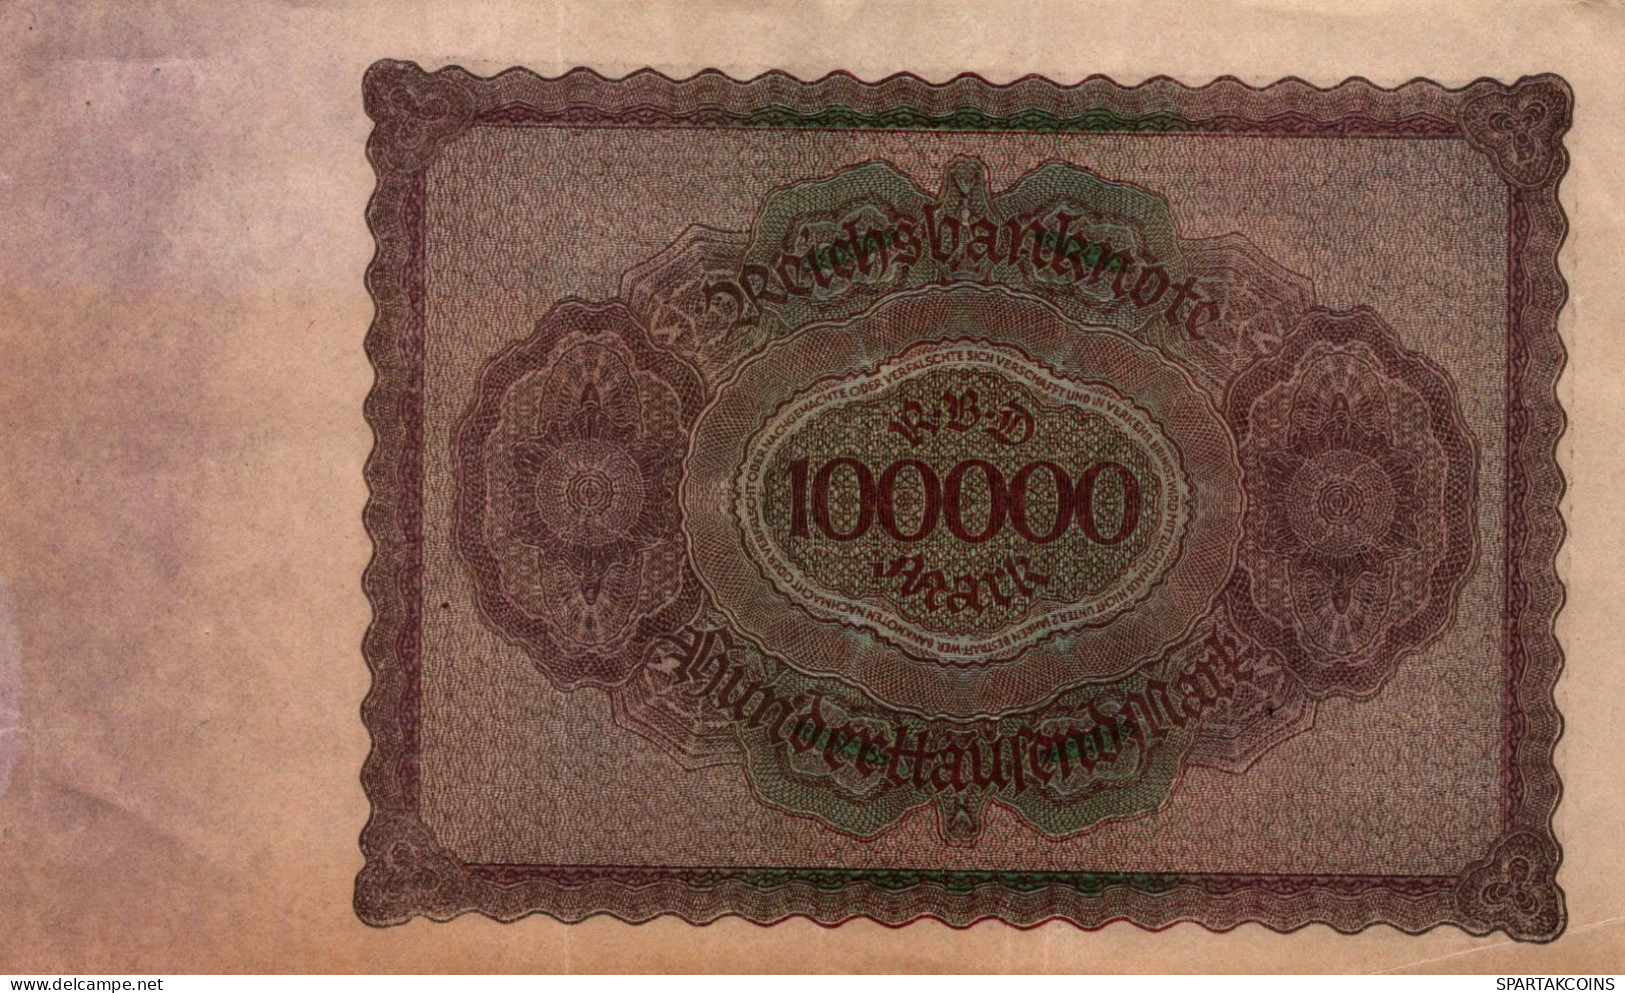 100000 MARK 1923 Stadt BERLIN DEUTSCHLAND Papiergeld Banknote #PL137 - [11] Lokale Uitgaven